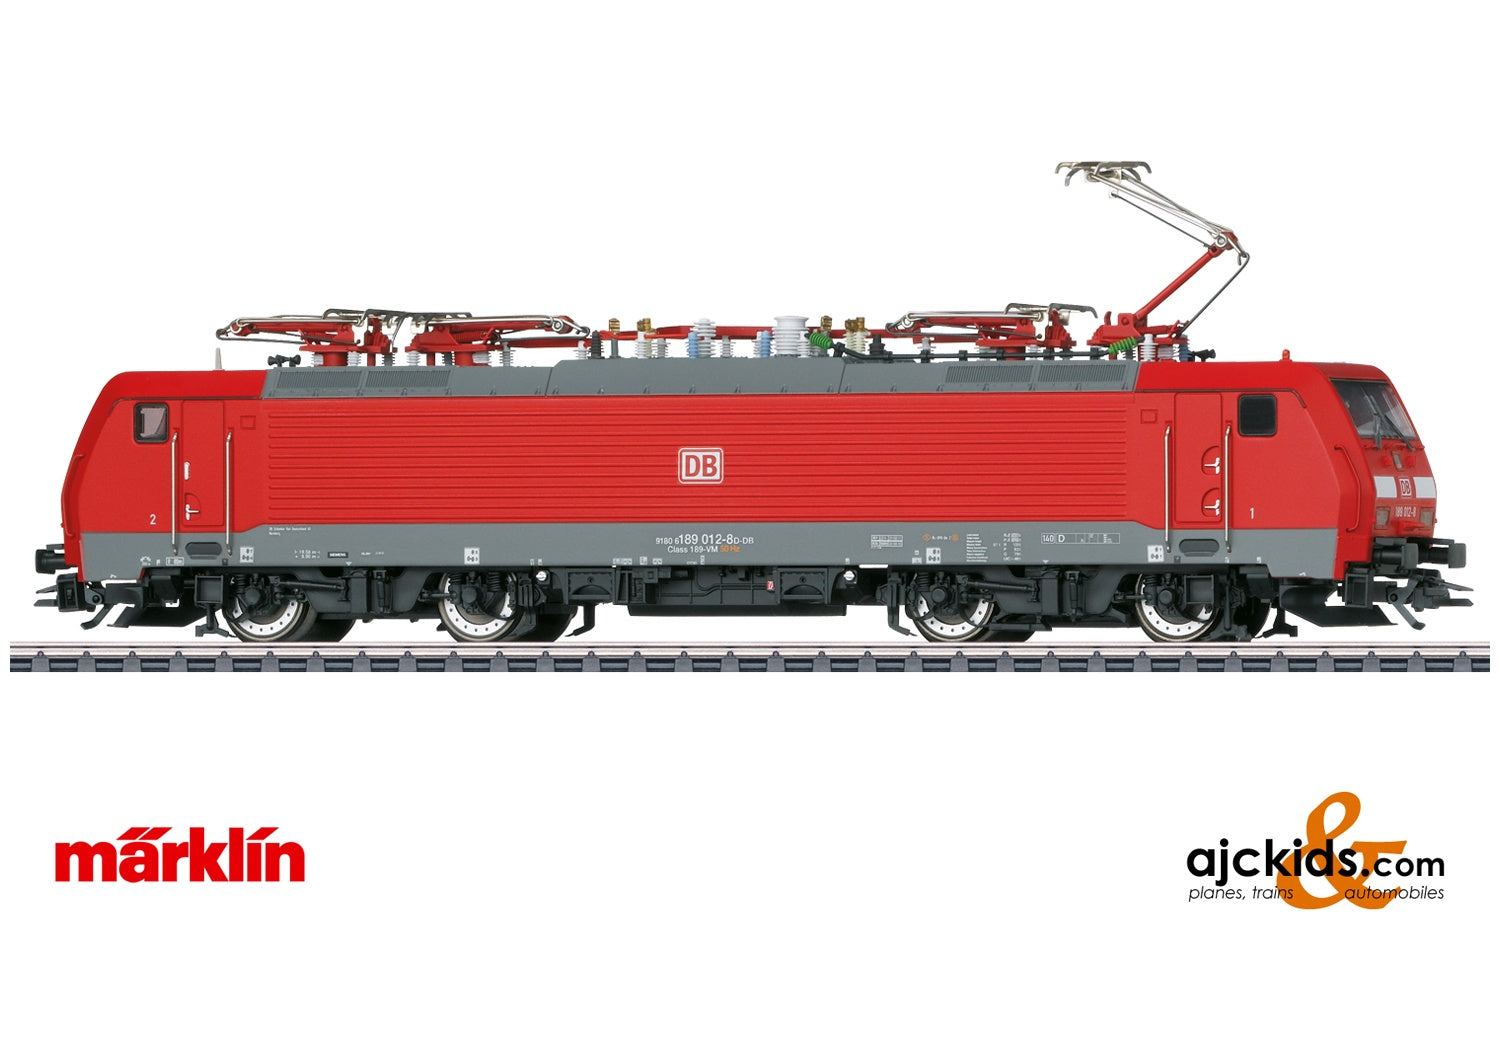 Marklin 39866 - Class 189 Electric Locomotive at Ajckids.com